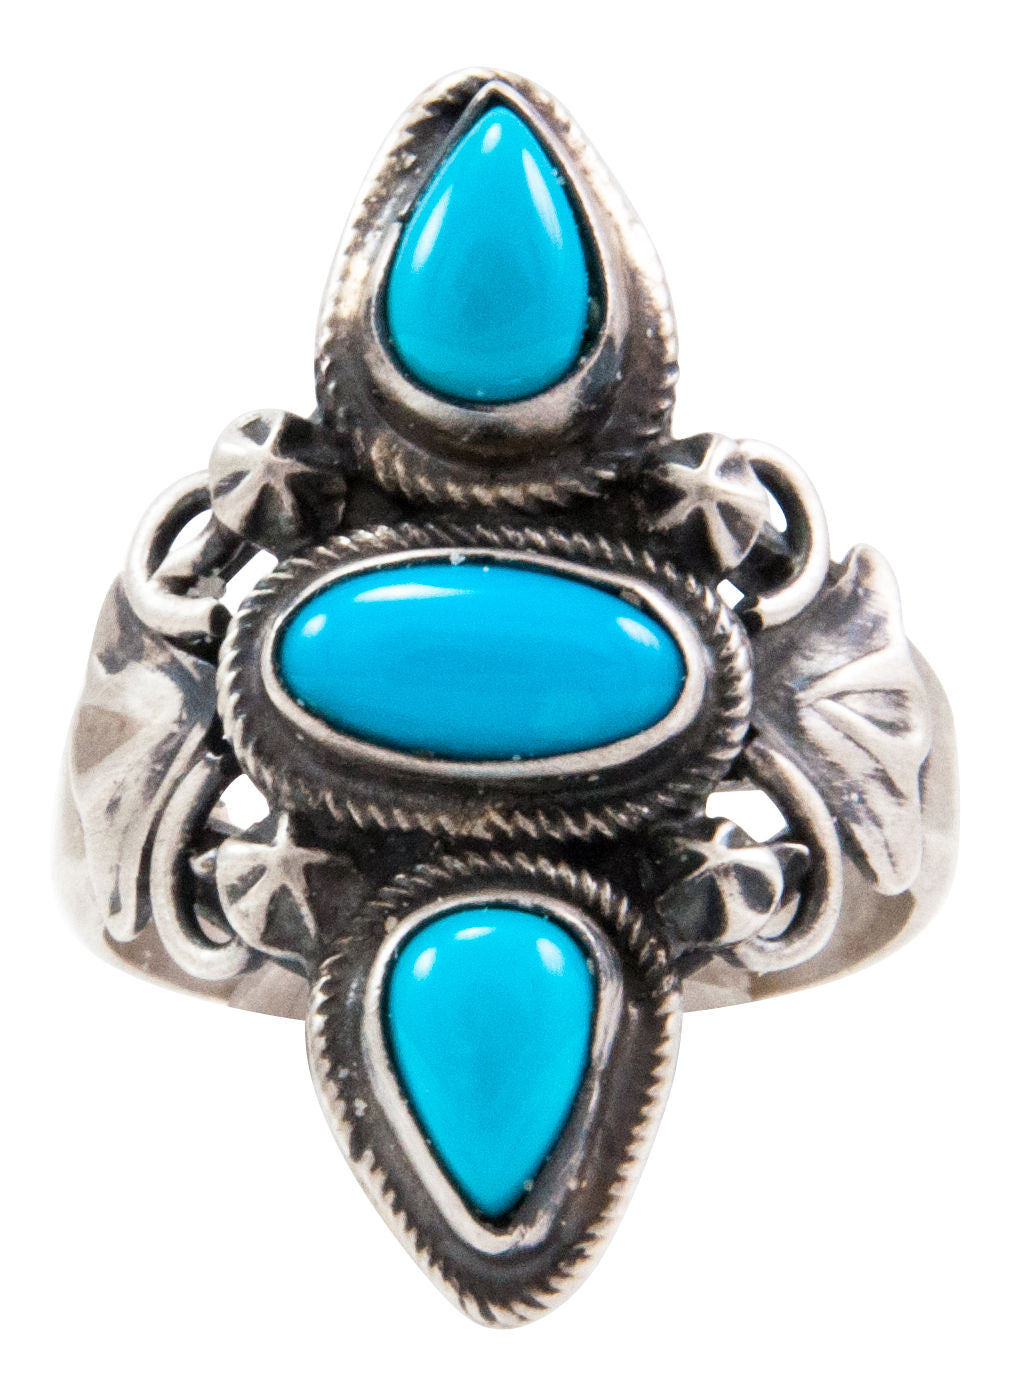 Navajo Native American Kingman Turquoise Ring Size 10 1/4 by Johnson SKU232660